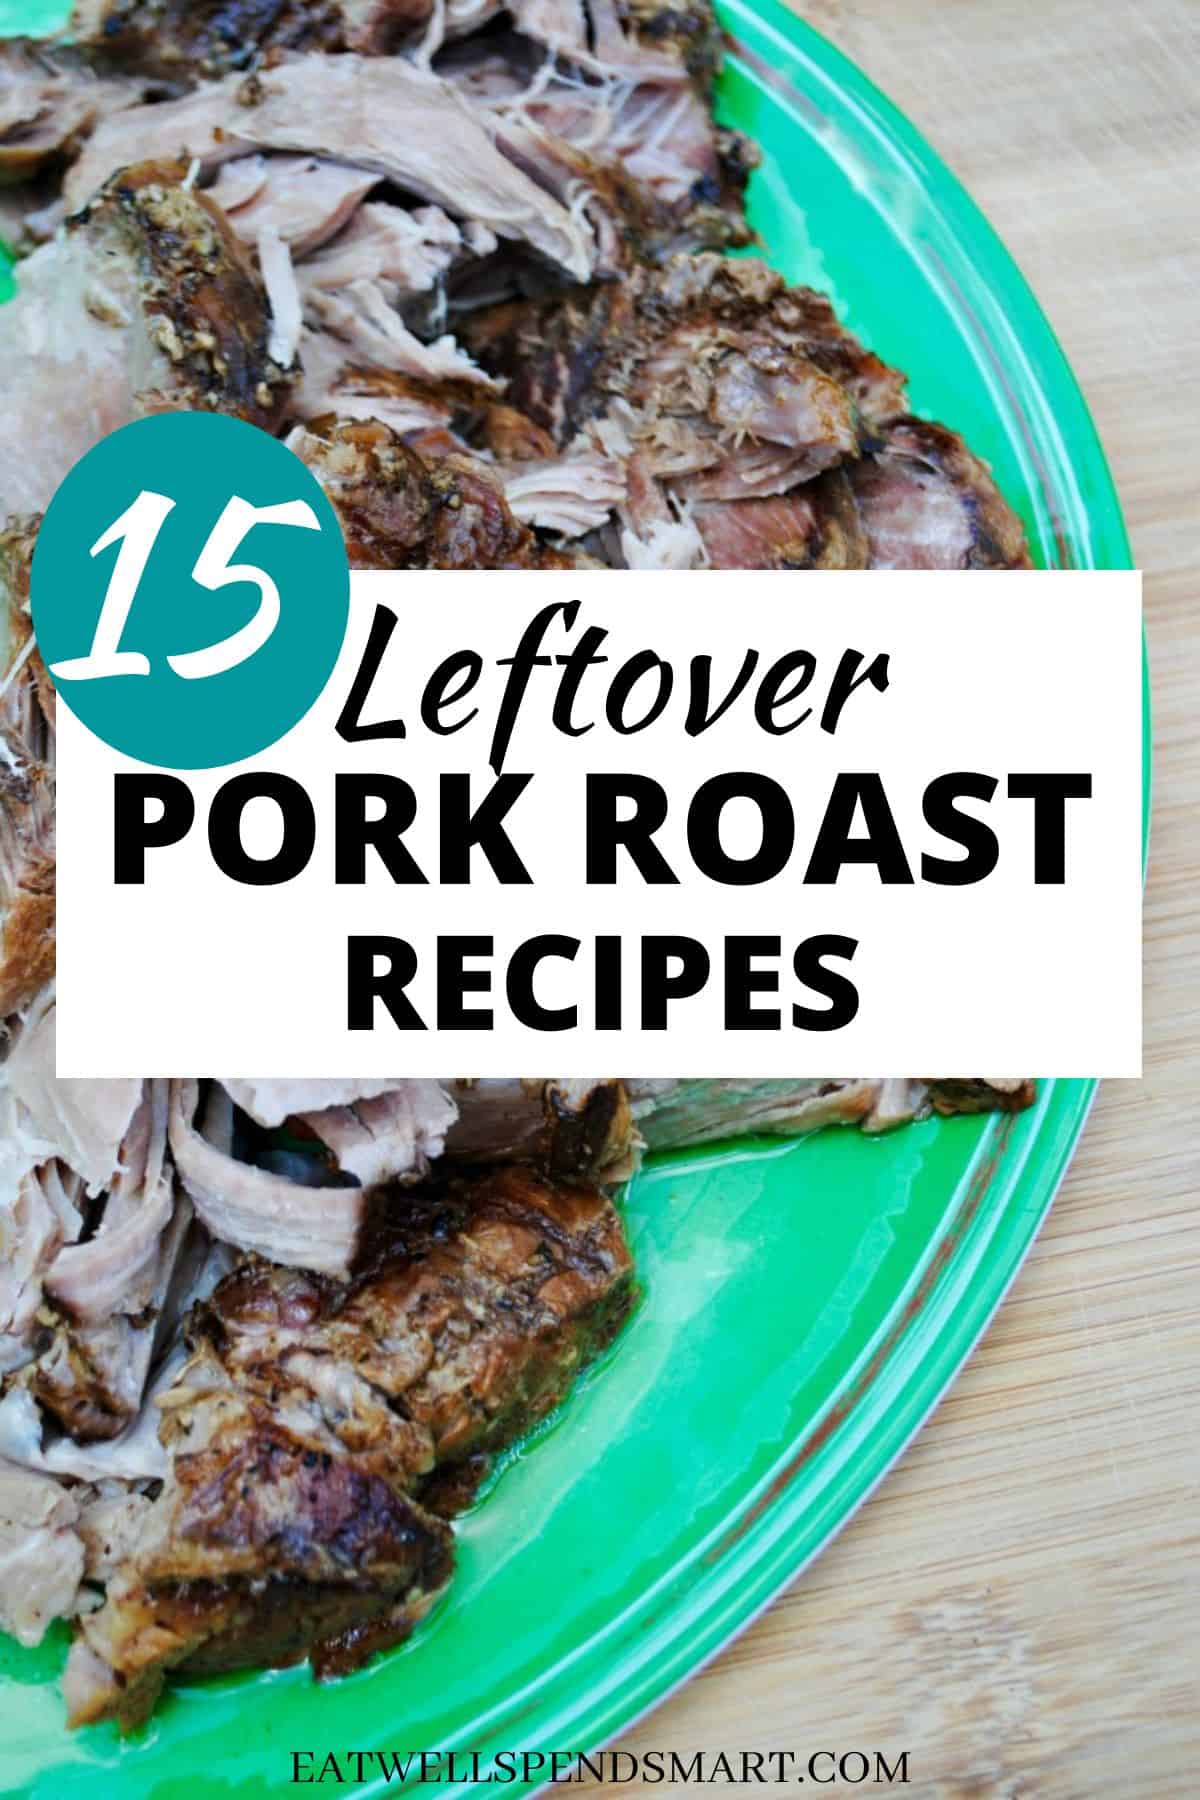 Pork roast on a green platter with text overlay: 15 leftover pork roast recipes